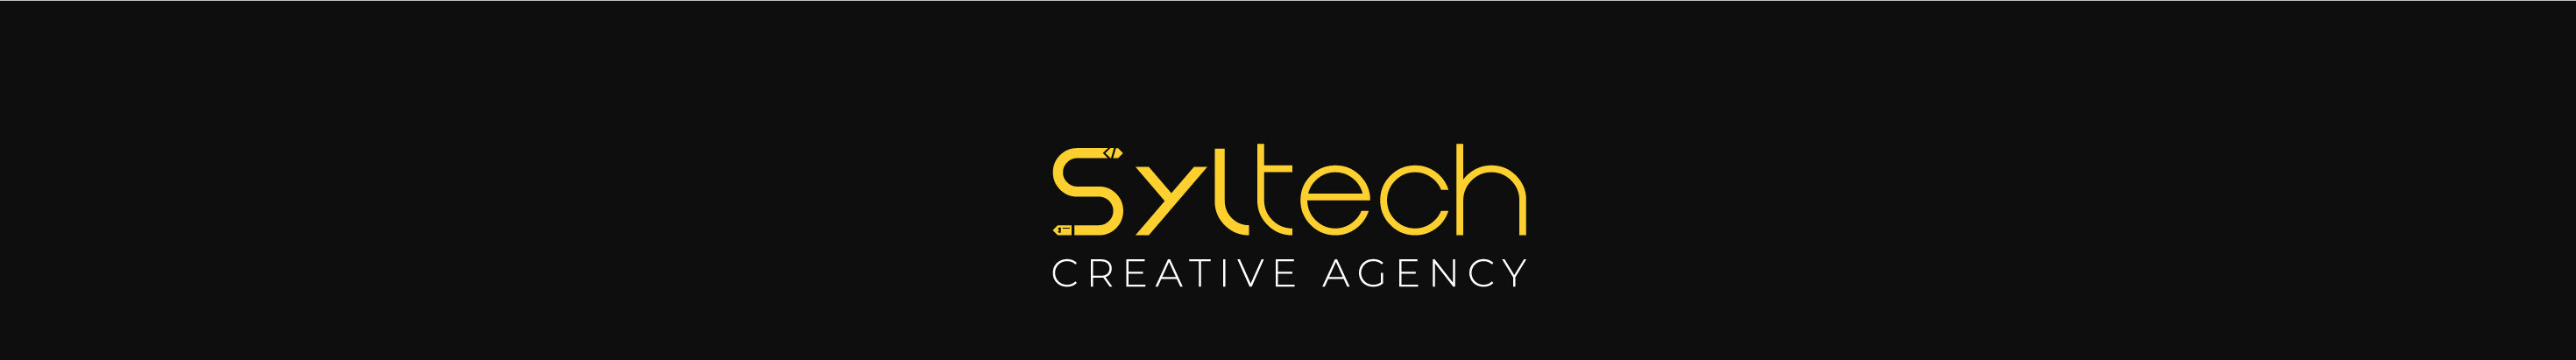 Syltech Creative Agency's profile banner